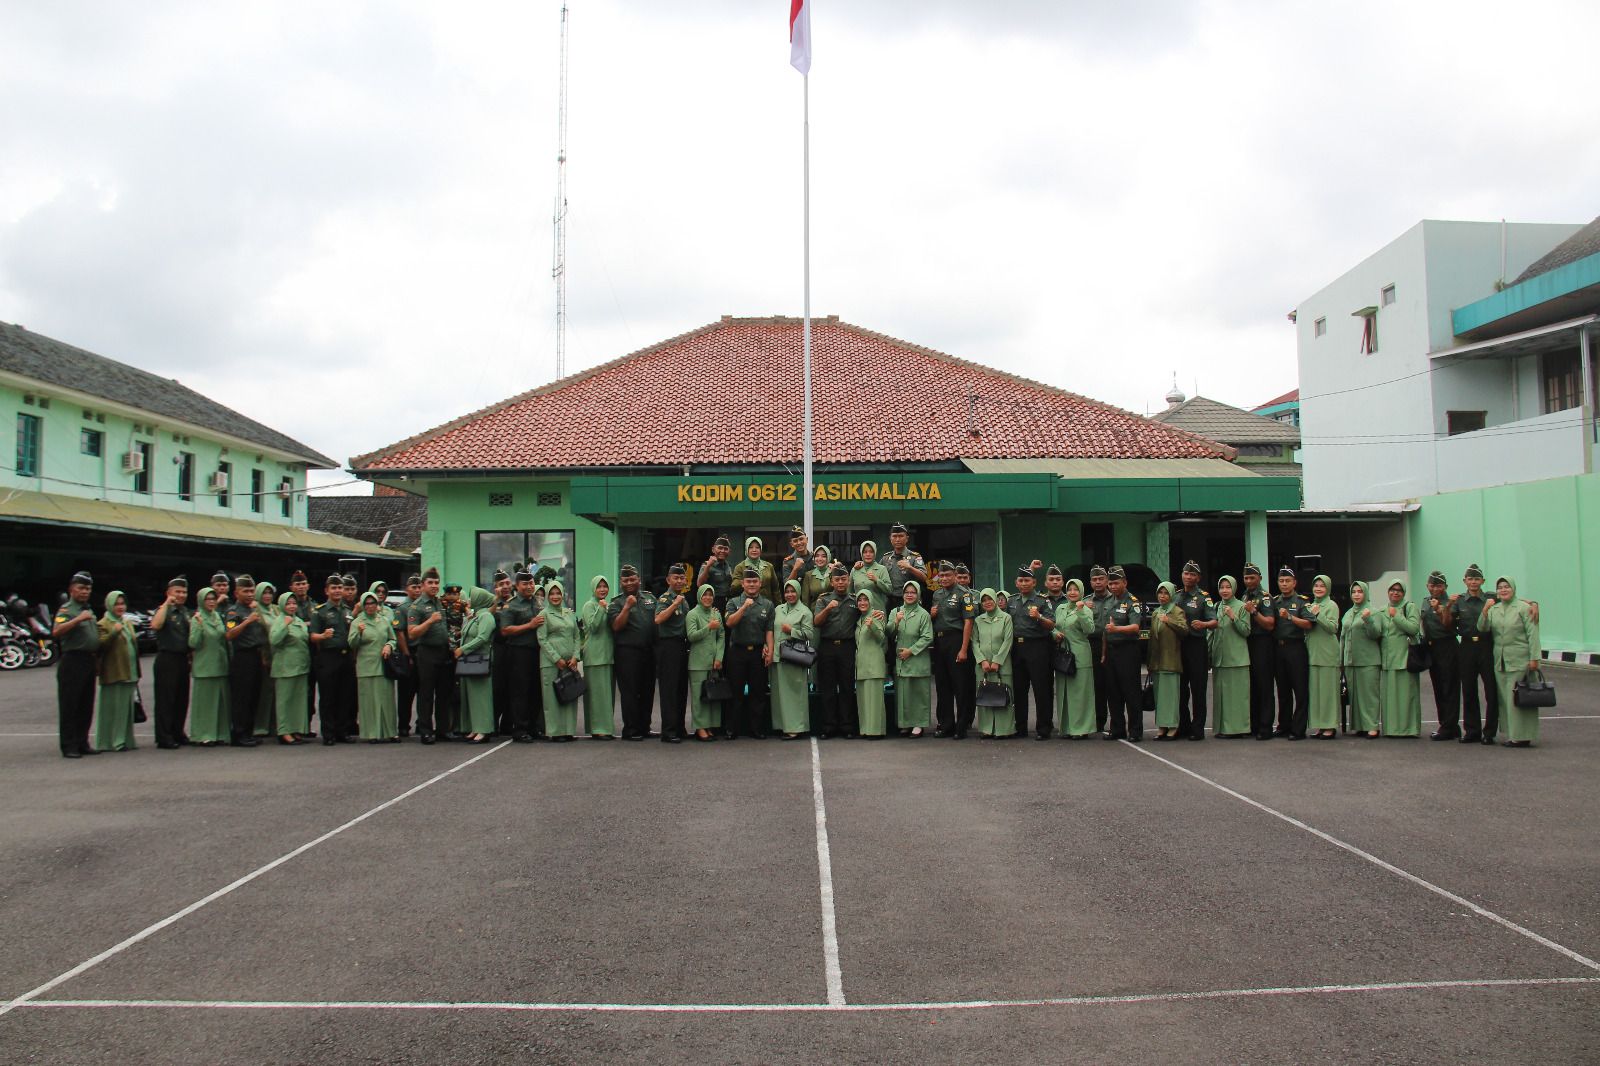 Kegiatan foto bersama selepas upacara korp raport kenaikan pangkat prajurit TNI AD Kodim 0612 Tasikmalaya